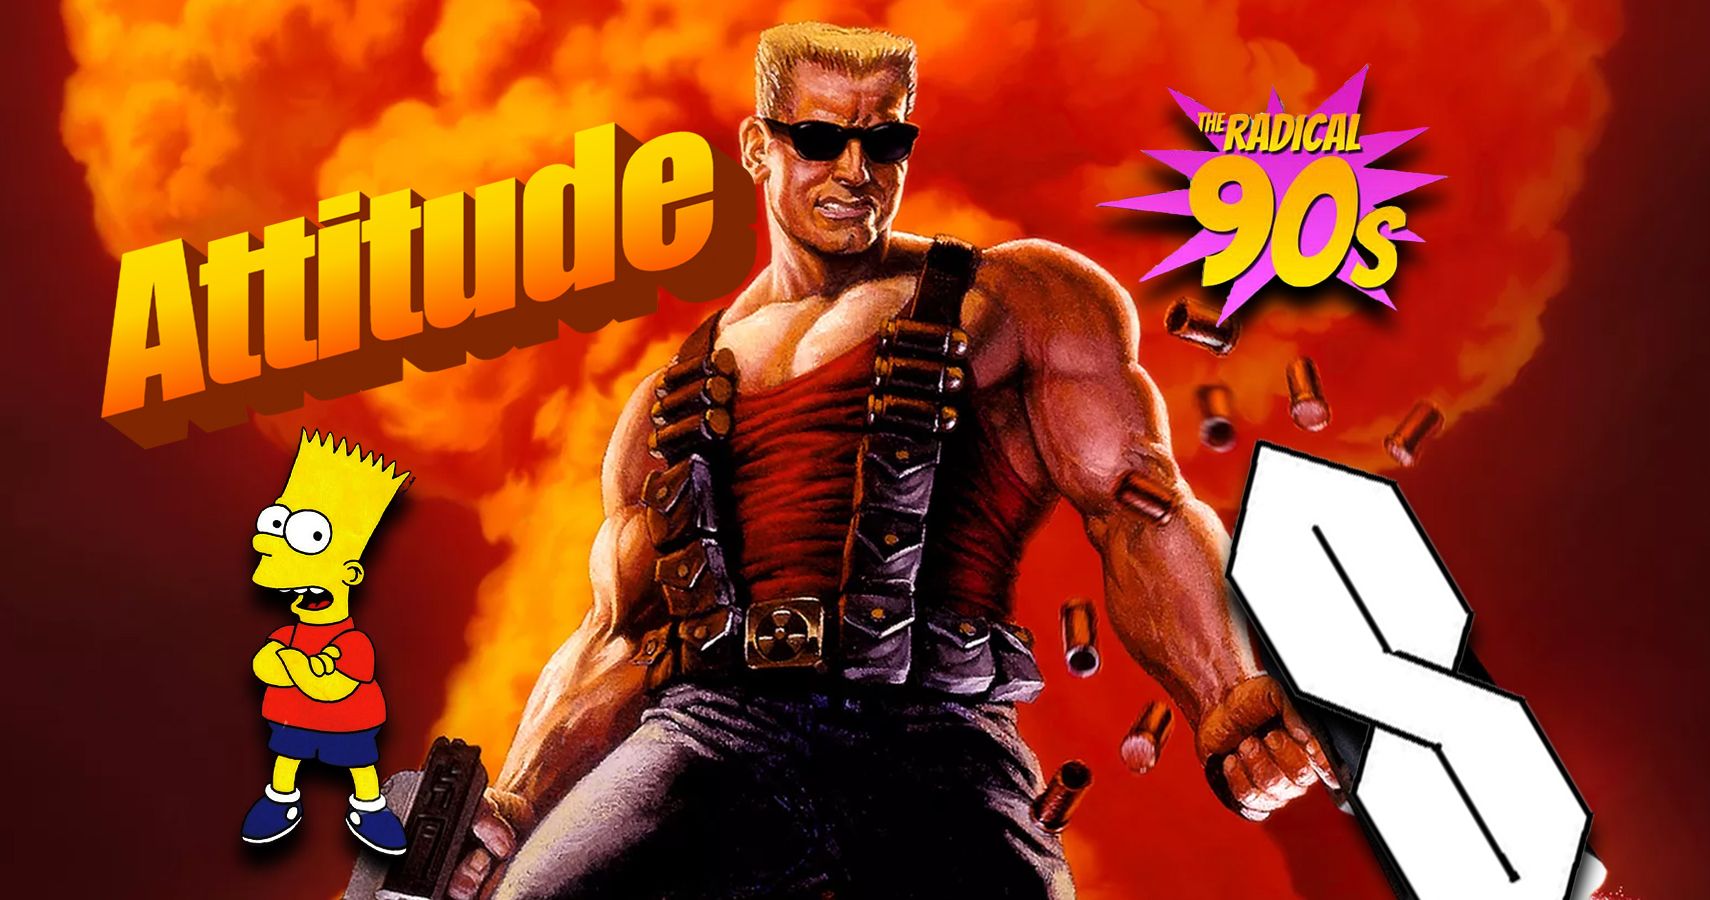 Duke Nukem 3D poster with 90s nostalgia gags photoshopped